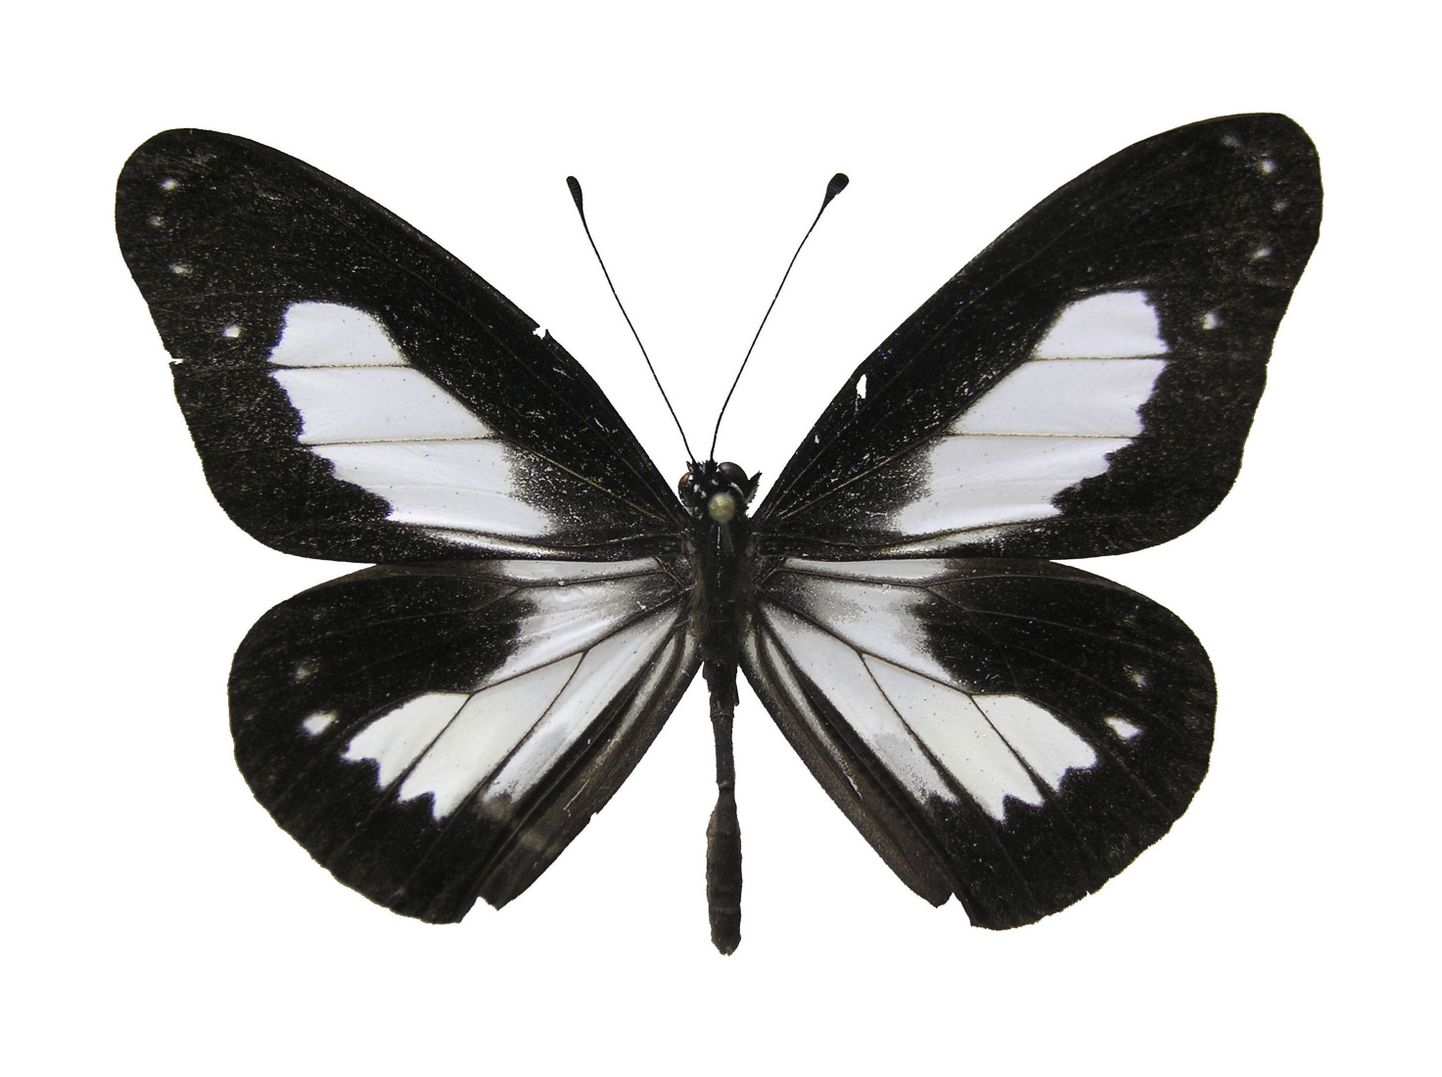 Musta-valgekirju liblikas